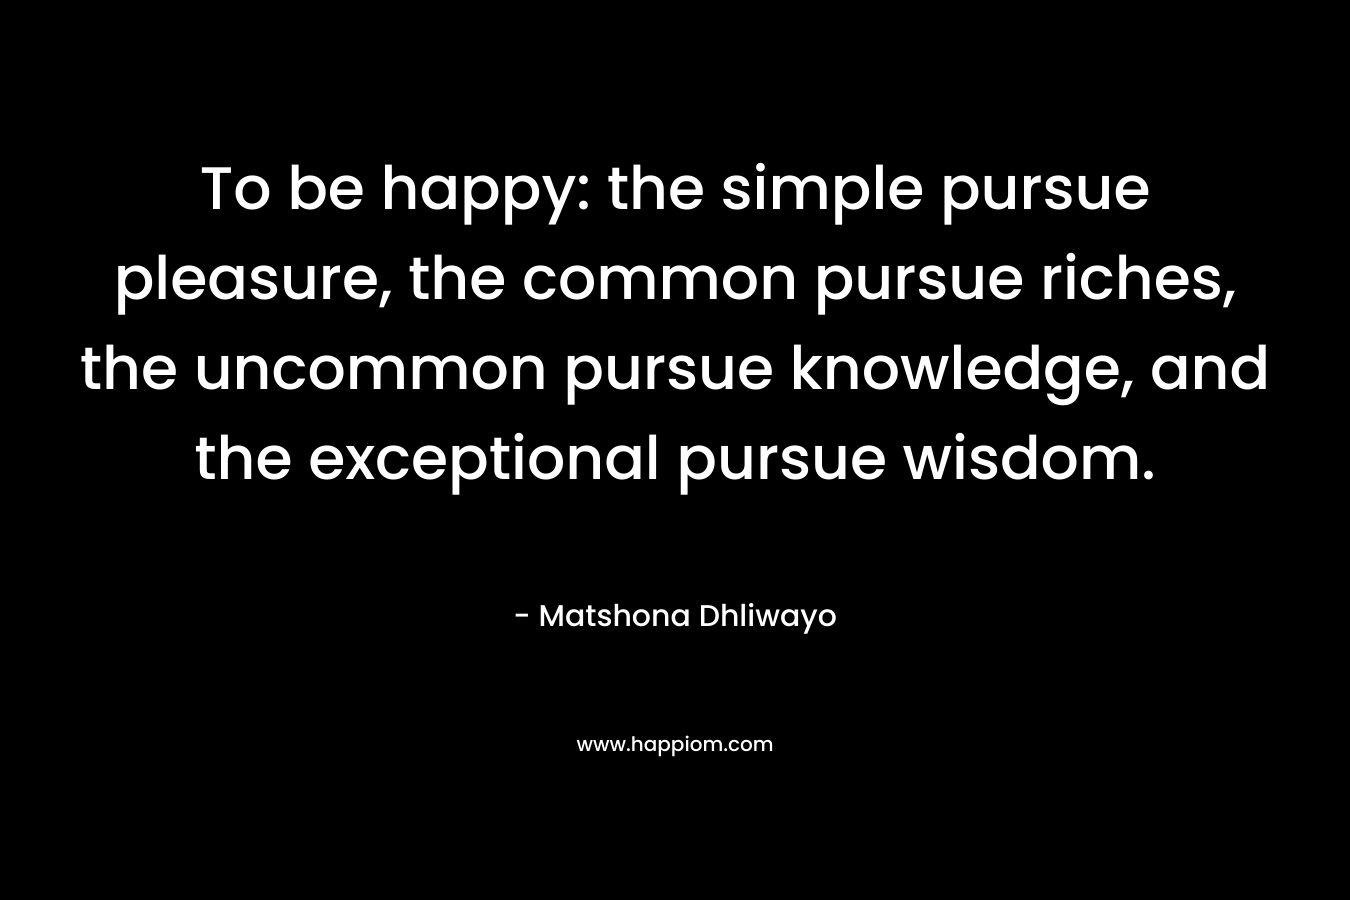 To be happy: the simple pursue pleasure, the common pursue riches, the uncommon pursue knowledge, and the exceptional pursue wisdom.